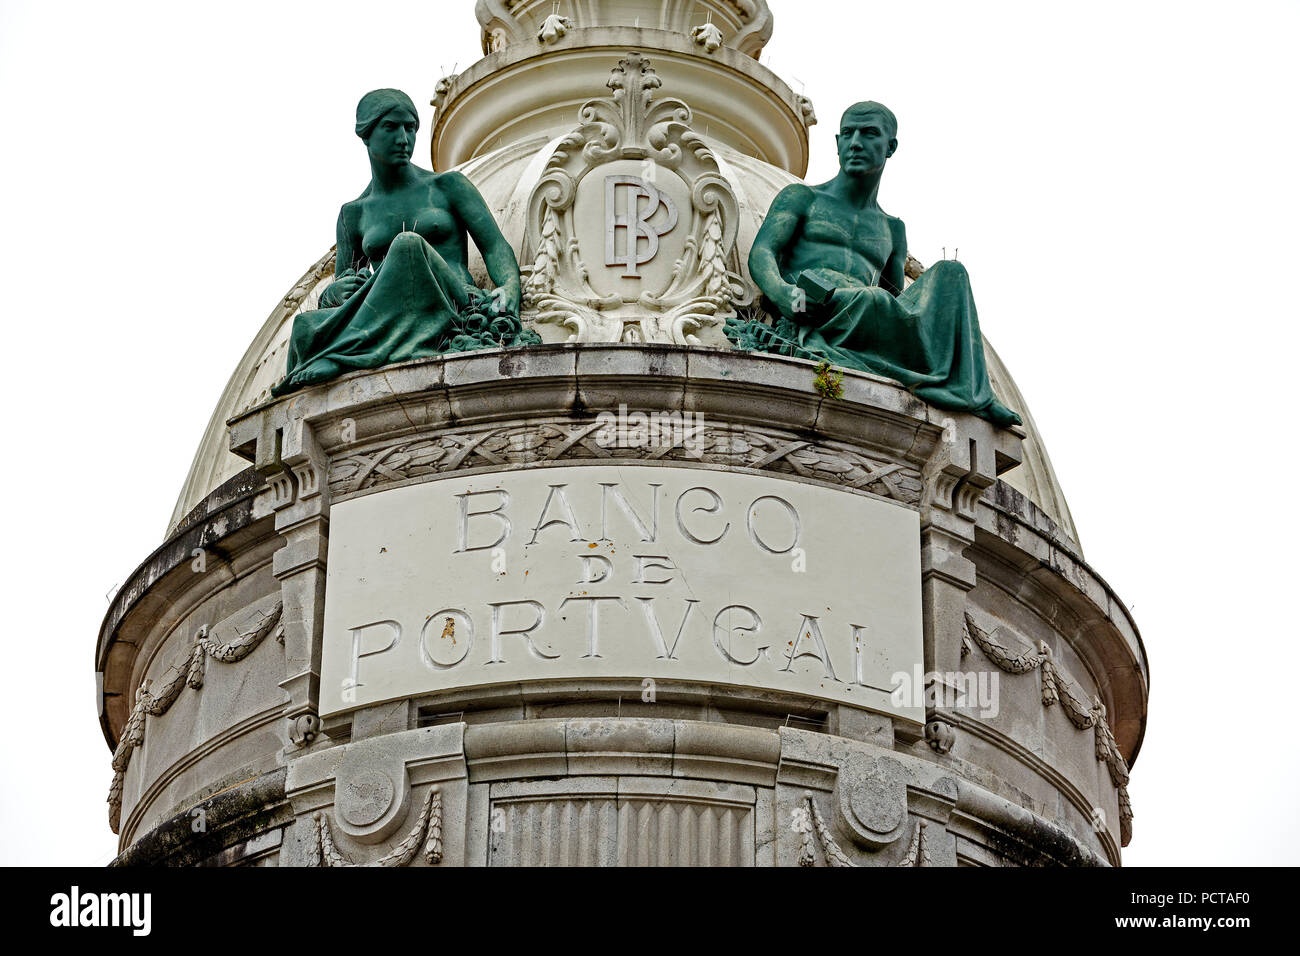 Banco Portugal facade, bank building, crisis symbol, Braga, Braga district, Portugal, Europe Stock Photo